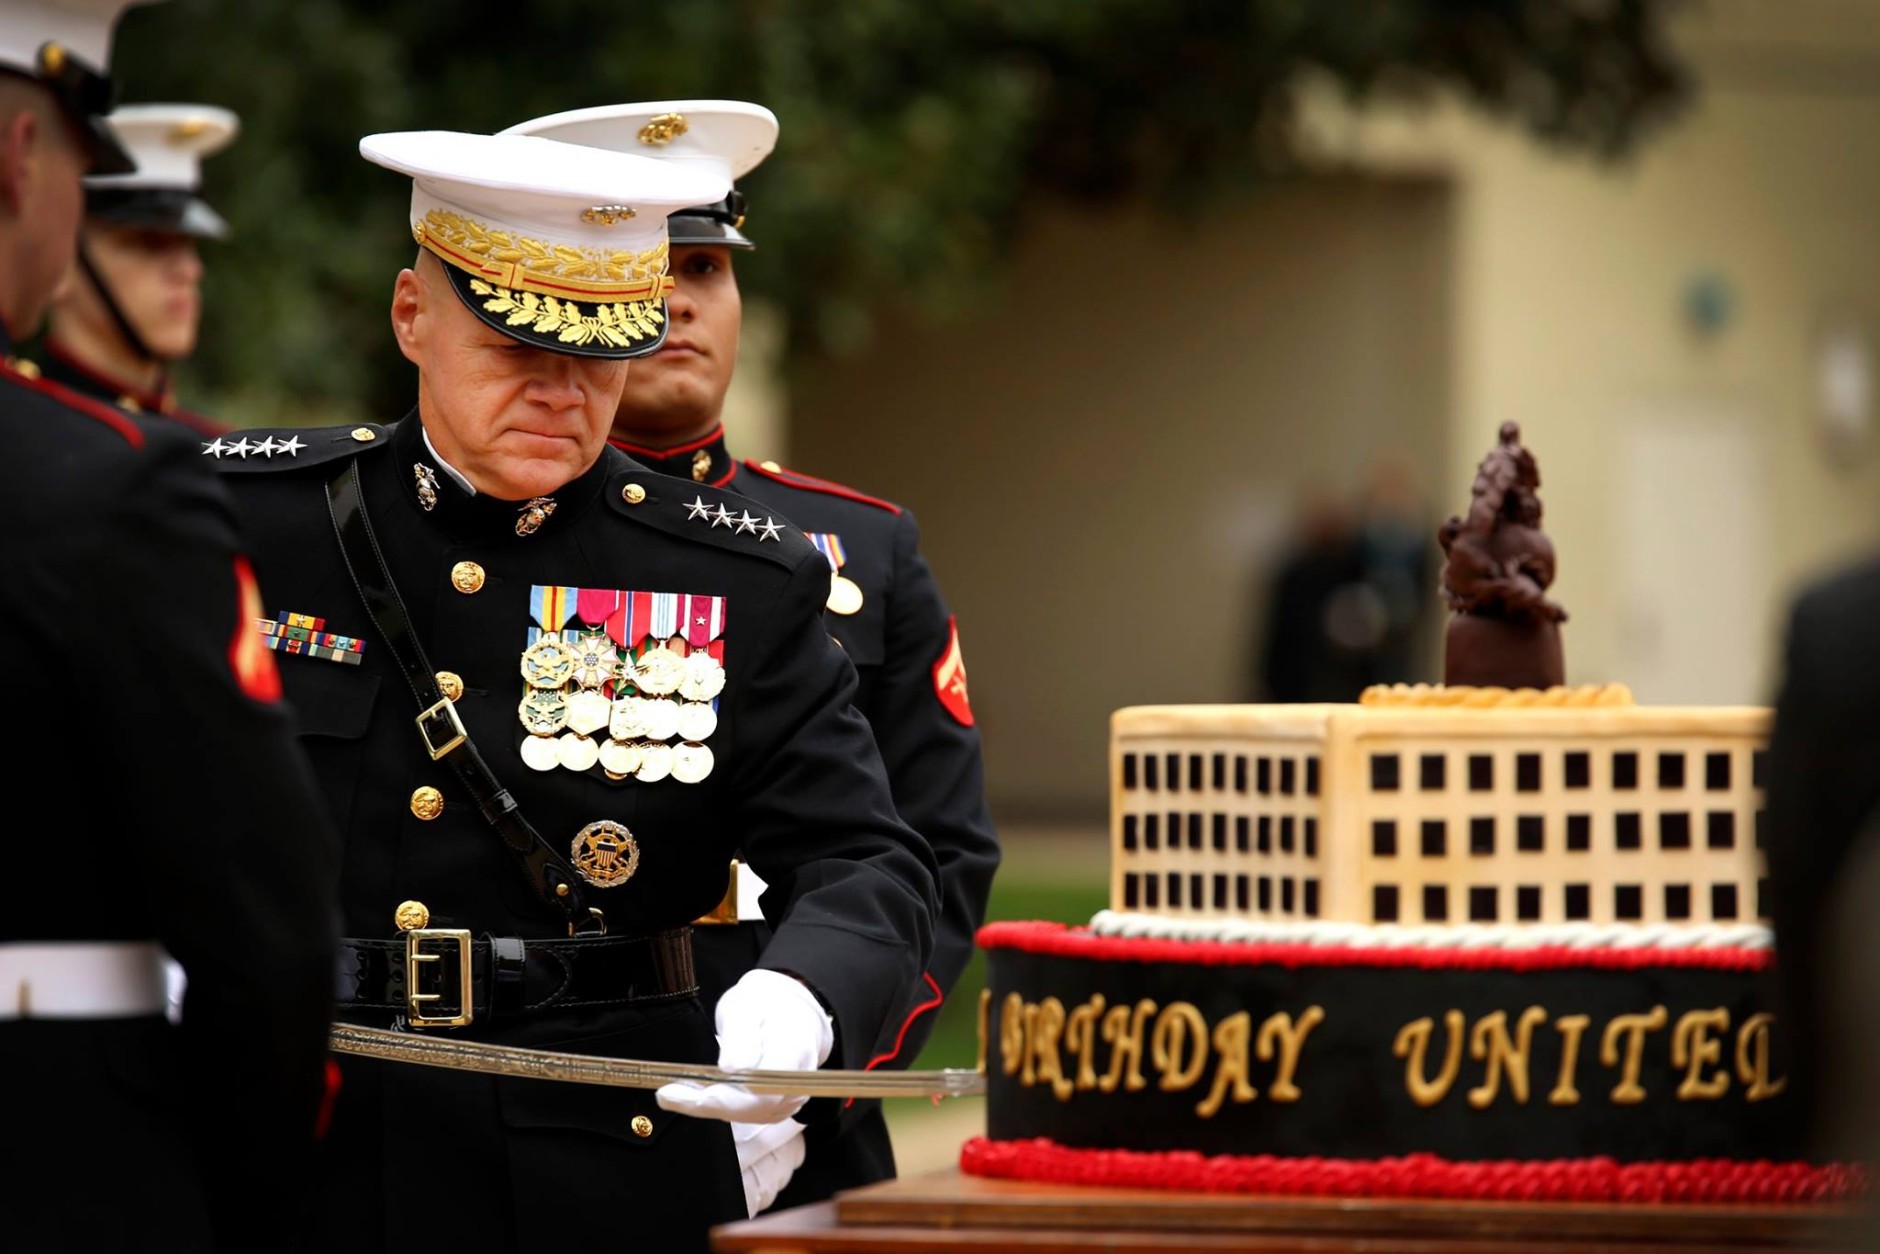 United States Marine Corps celebrates 240th birthday WTOP